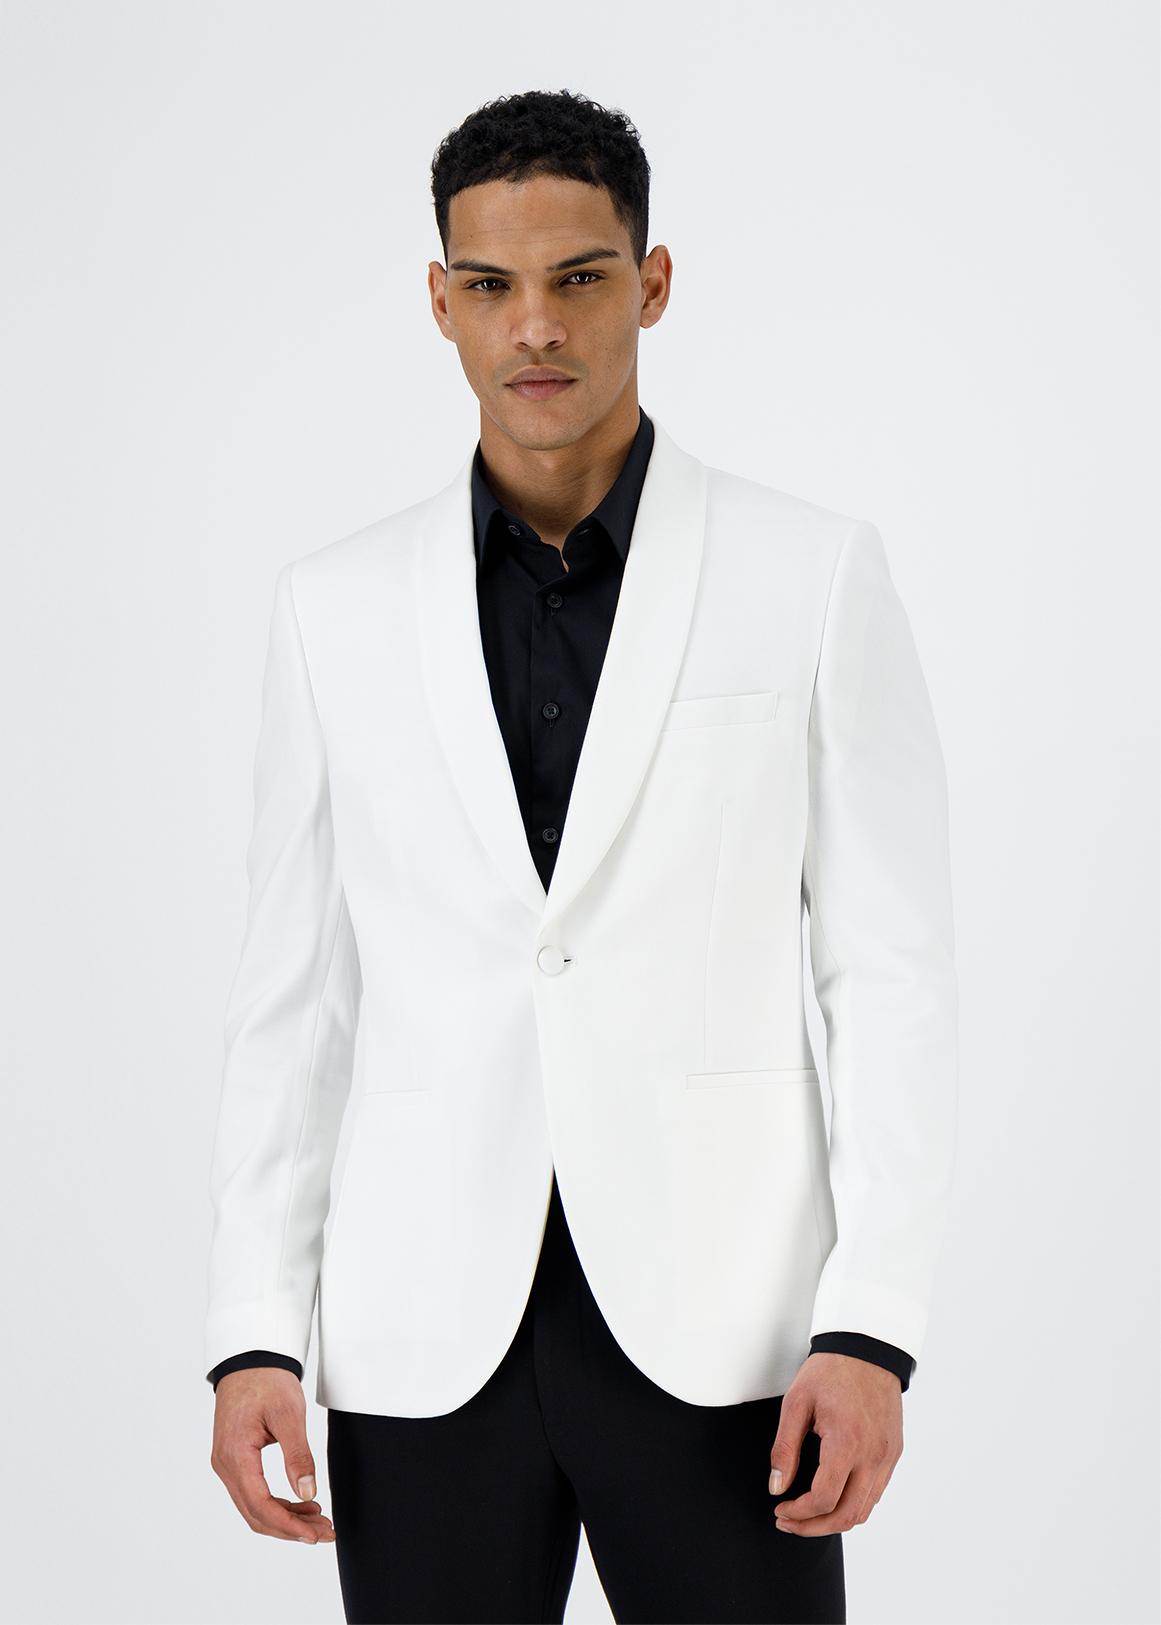 https://assets.woolworthsstatic.co.za/Cream-Slim-Fit-Stretch-Viscose-Blend-Suit-Jacket-CREAM-507294246.jpg?V=isqE&o=eyJidWNrZXQiOiJ3dy1vbmxpbmUtaW1hZ2UtcmVzaXplIiwia2V5IjoiaW1hZ2VzL2VsYXN0aWNlcmEvcHJvZHVjdHMvaGVyby8yMDIzLTEwLTA0LzUwNzI5NDI0Nl9DUkVBTV9oZXJvLmpwZyJ9&q=75